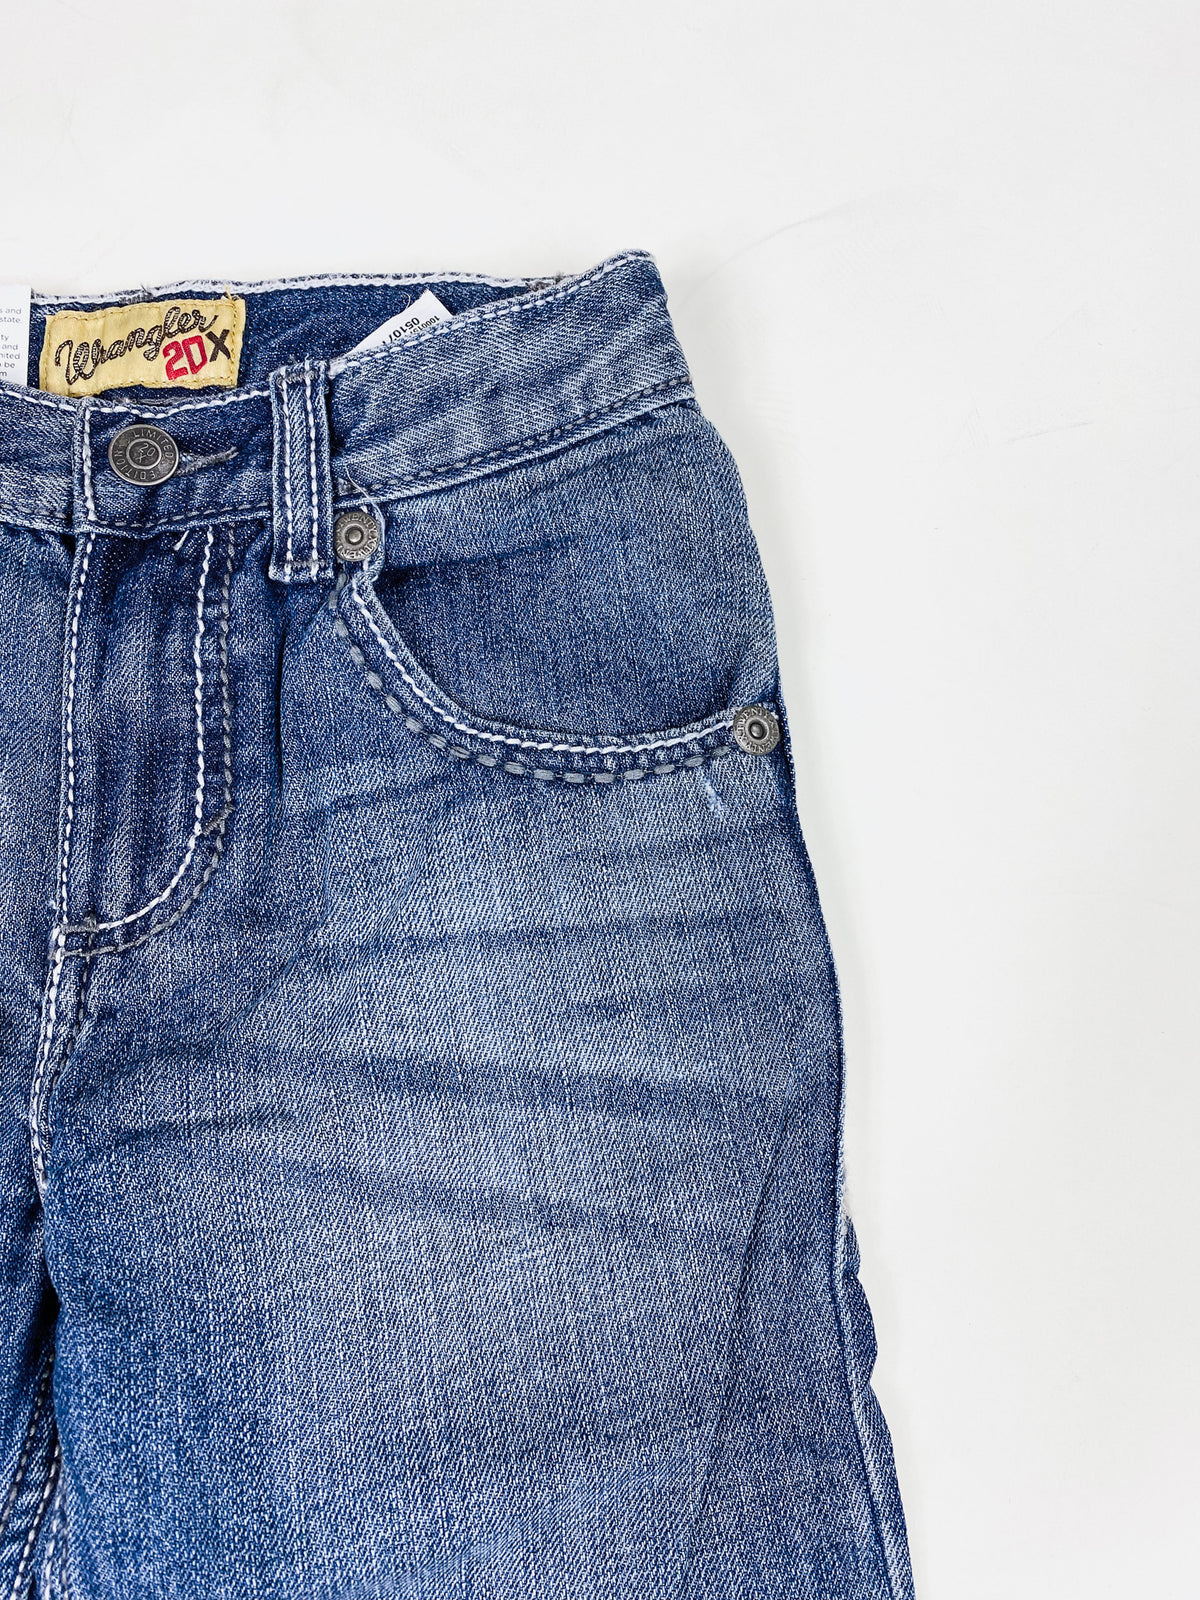 Youth Wrangler Vintage Slim Bootcut Jeans